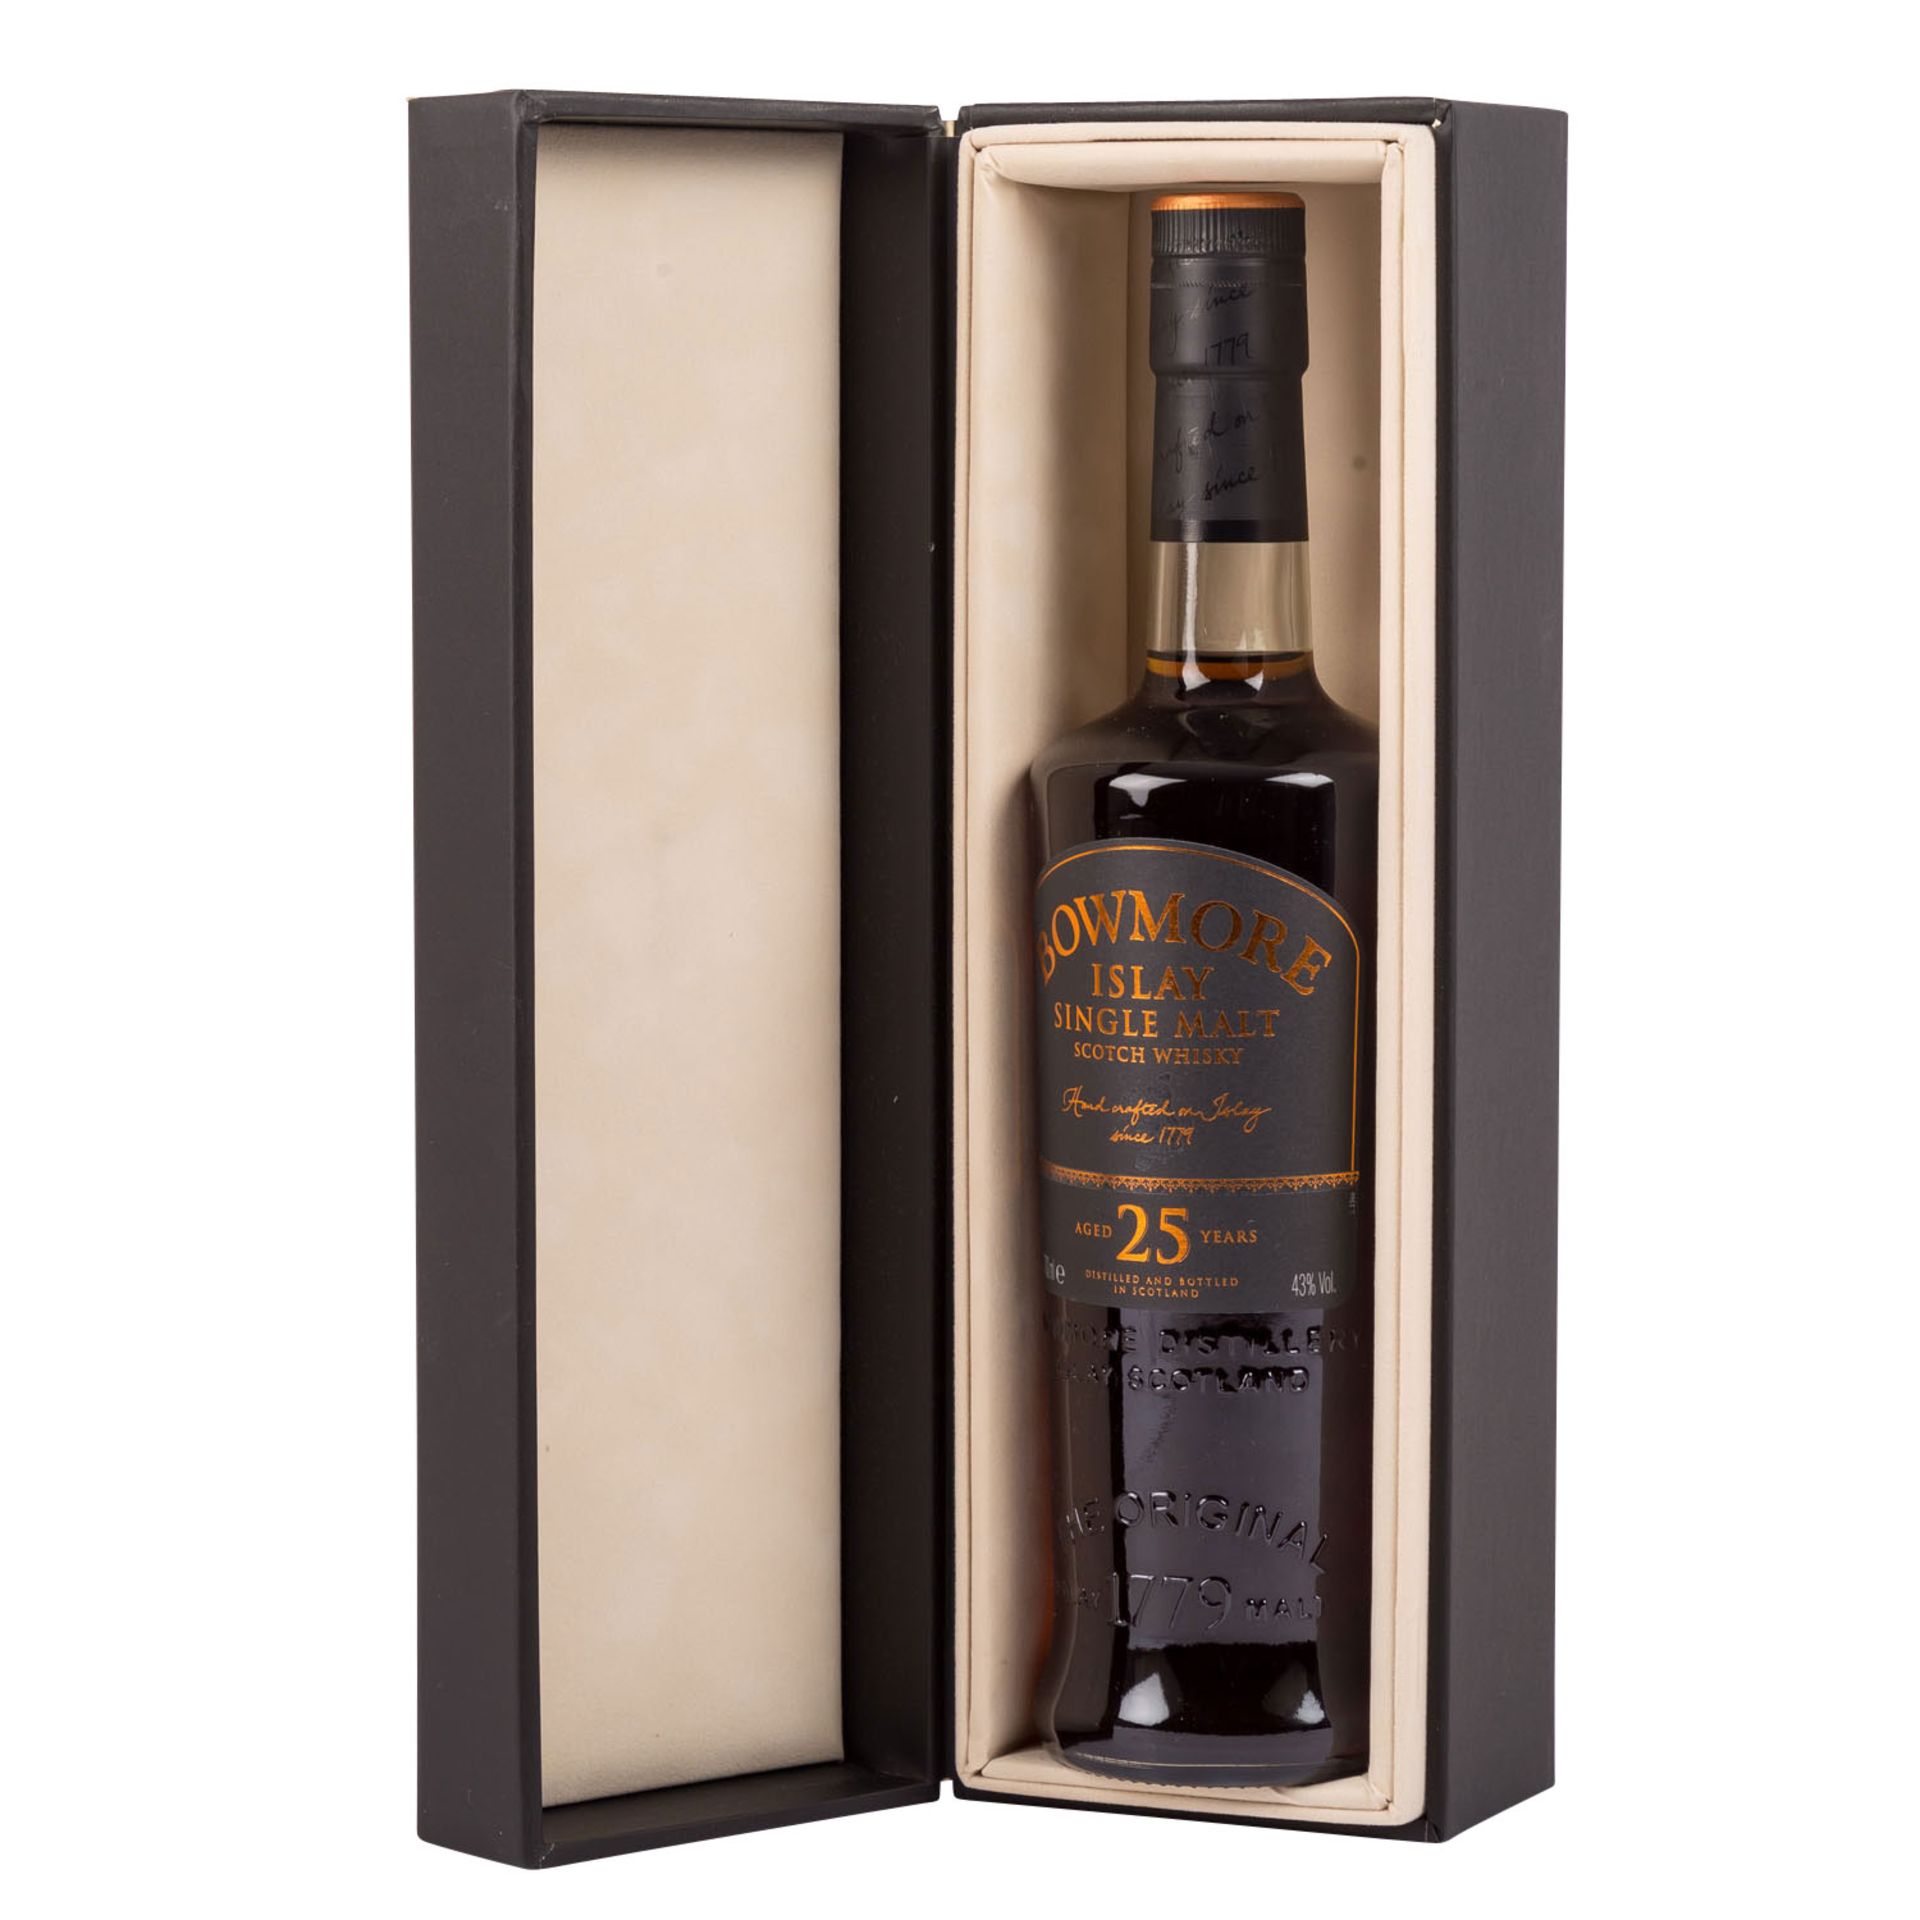 BOWMORE Single Malt Scotch Whisky, 25 years - Image 4 of 4